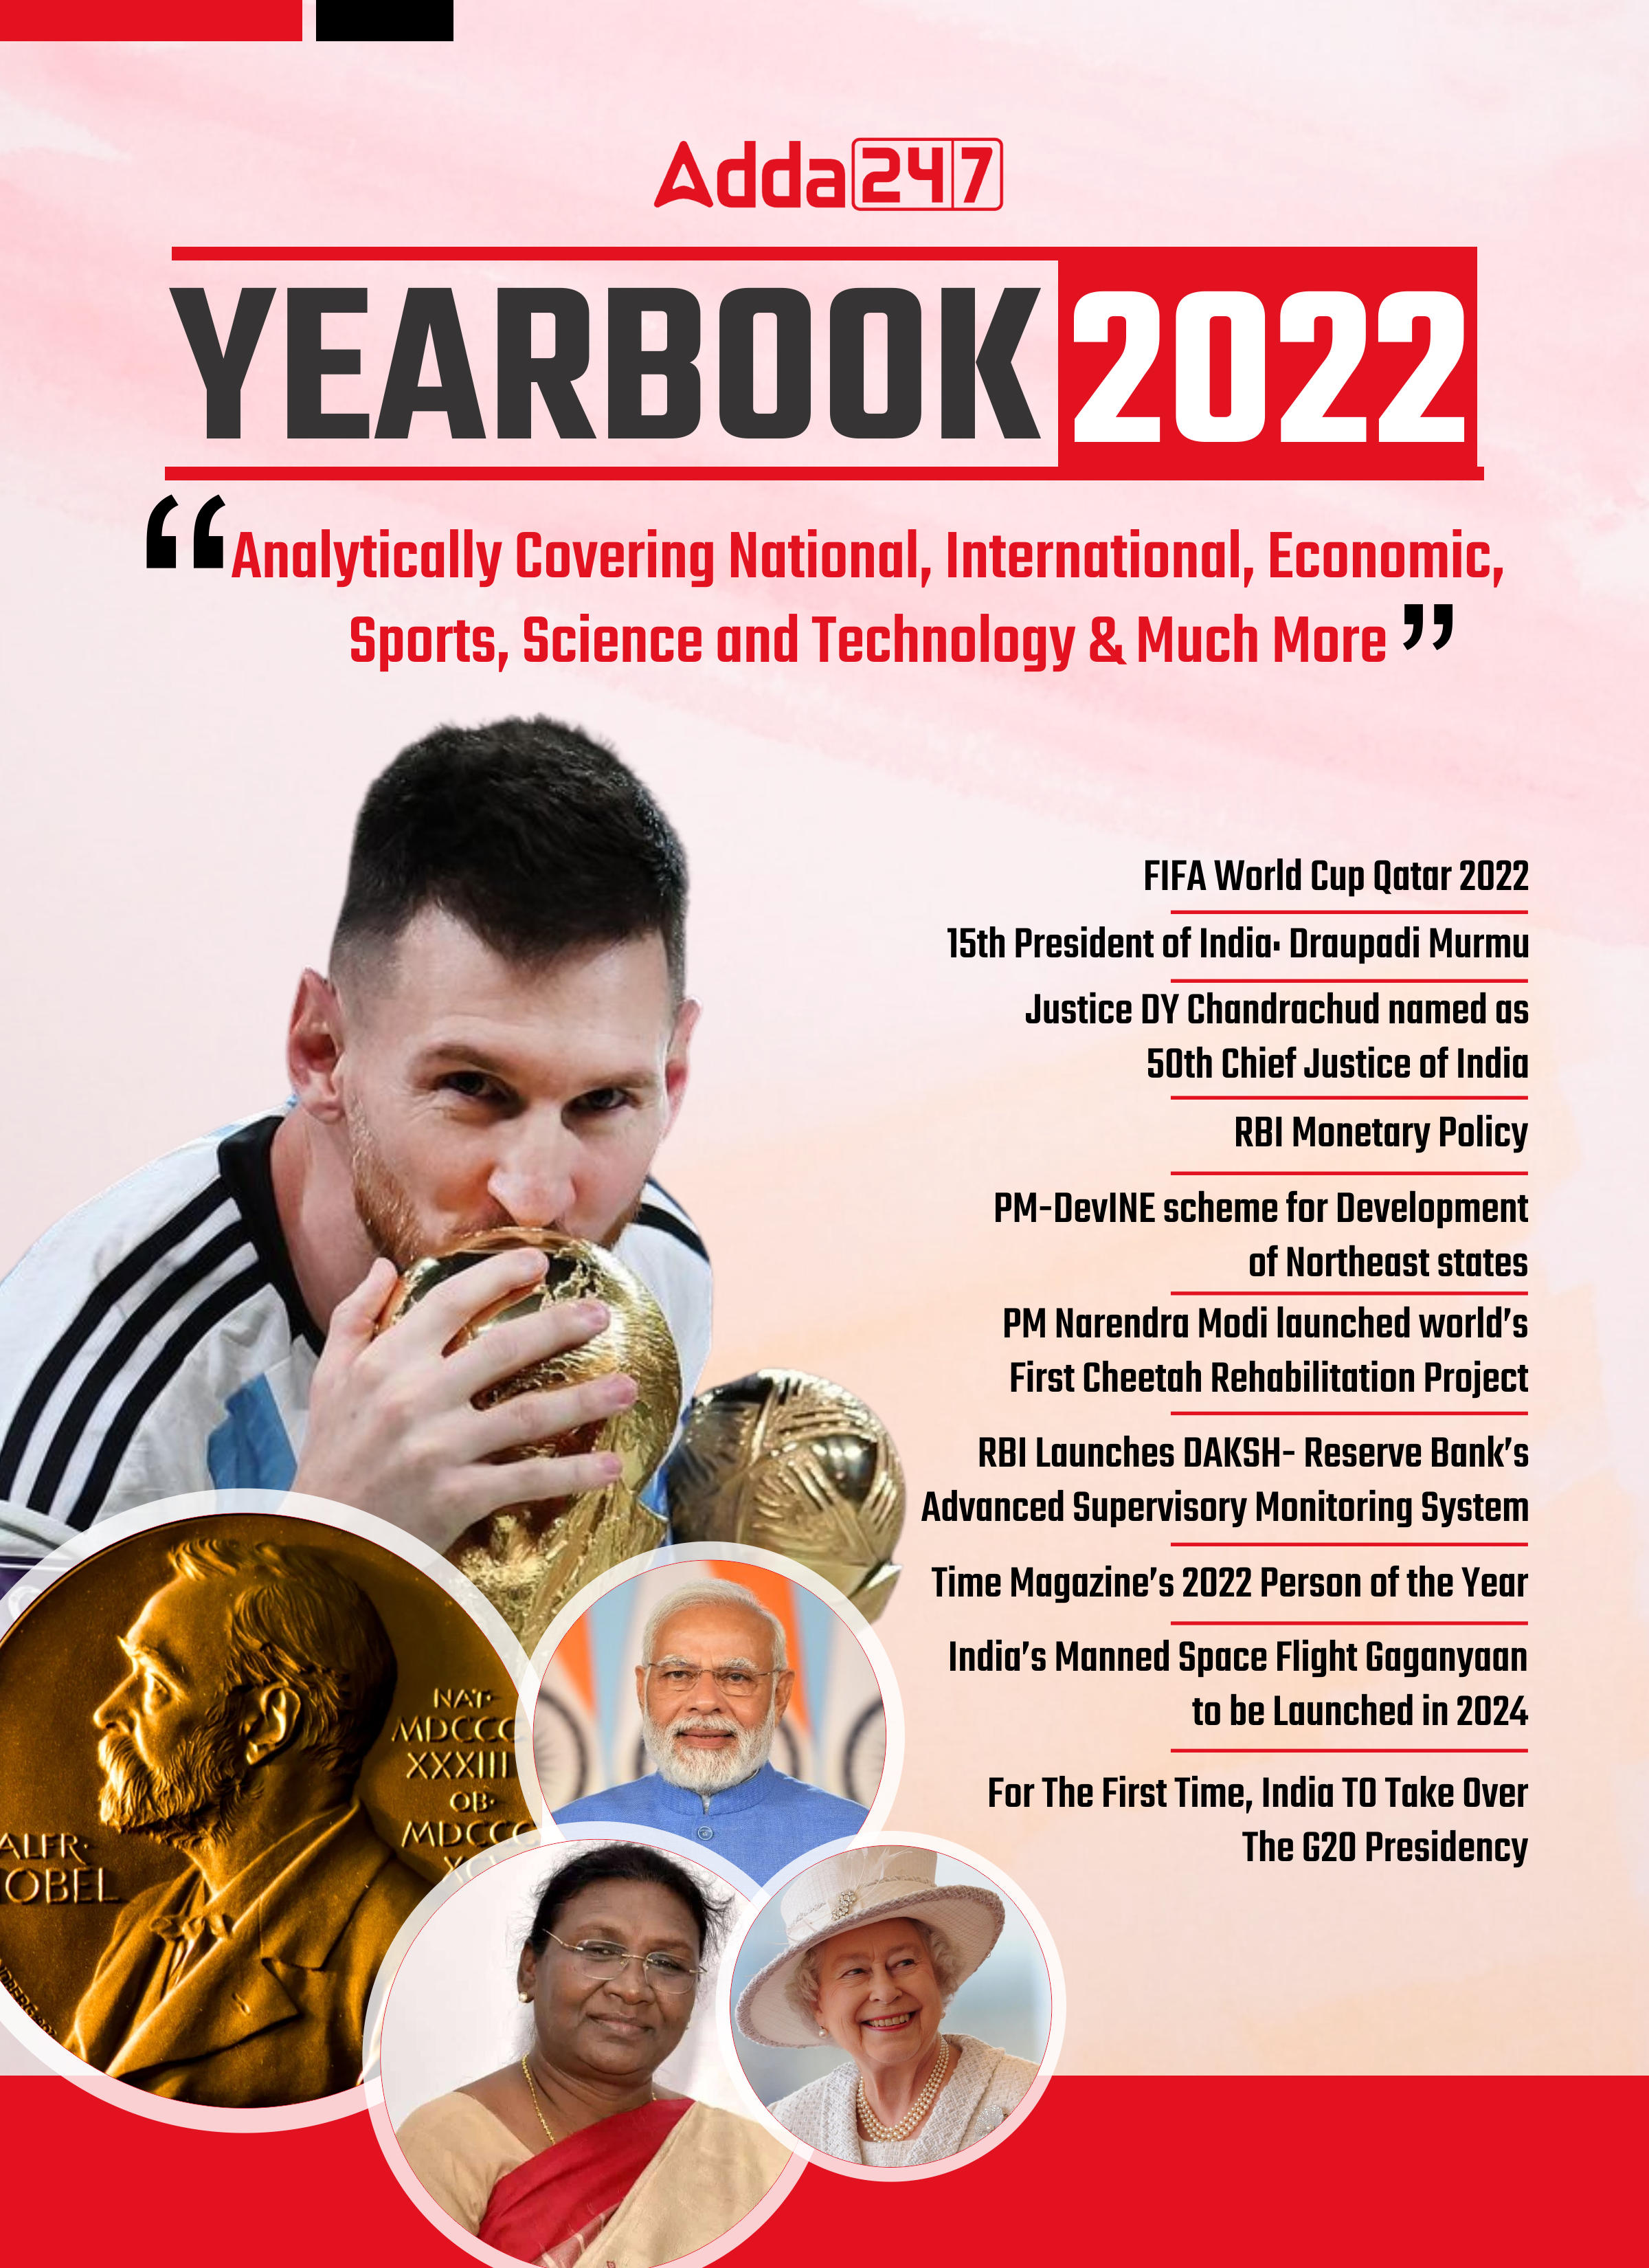 Adda247 Yearbook 2022 PDF Download_30.1